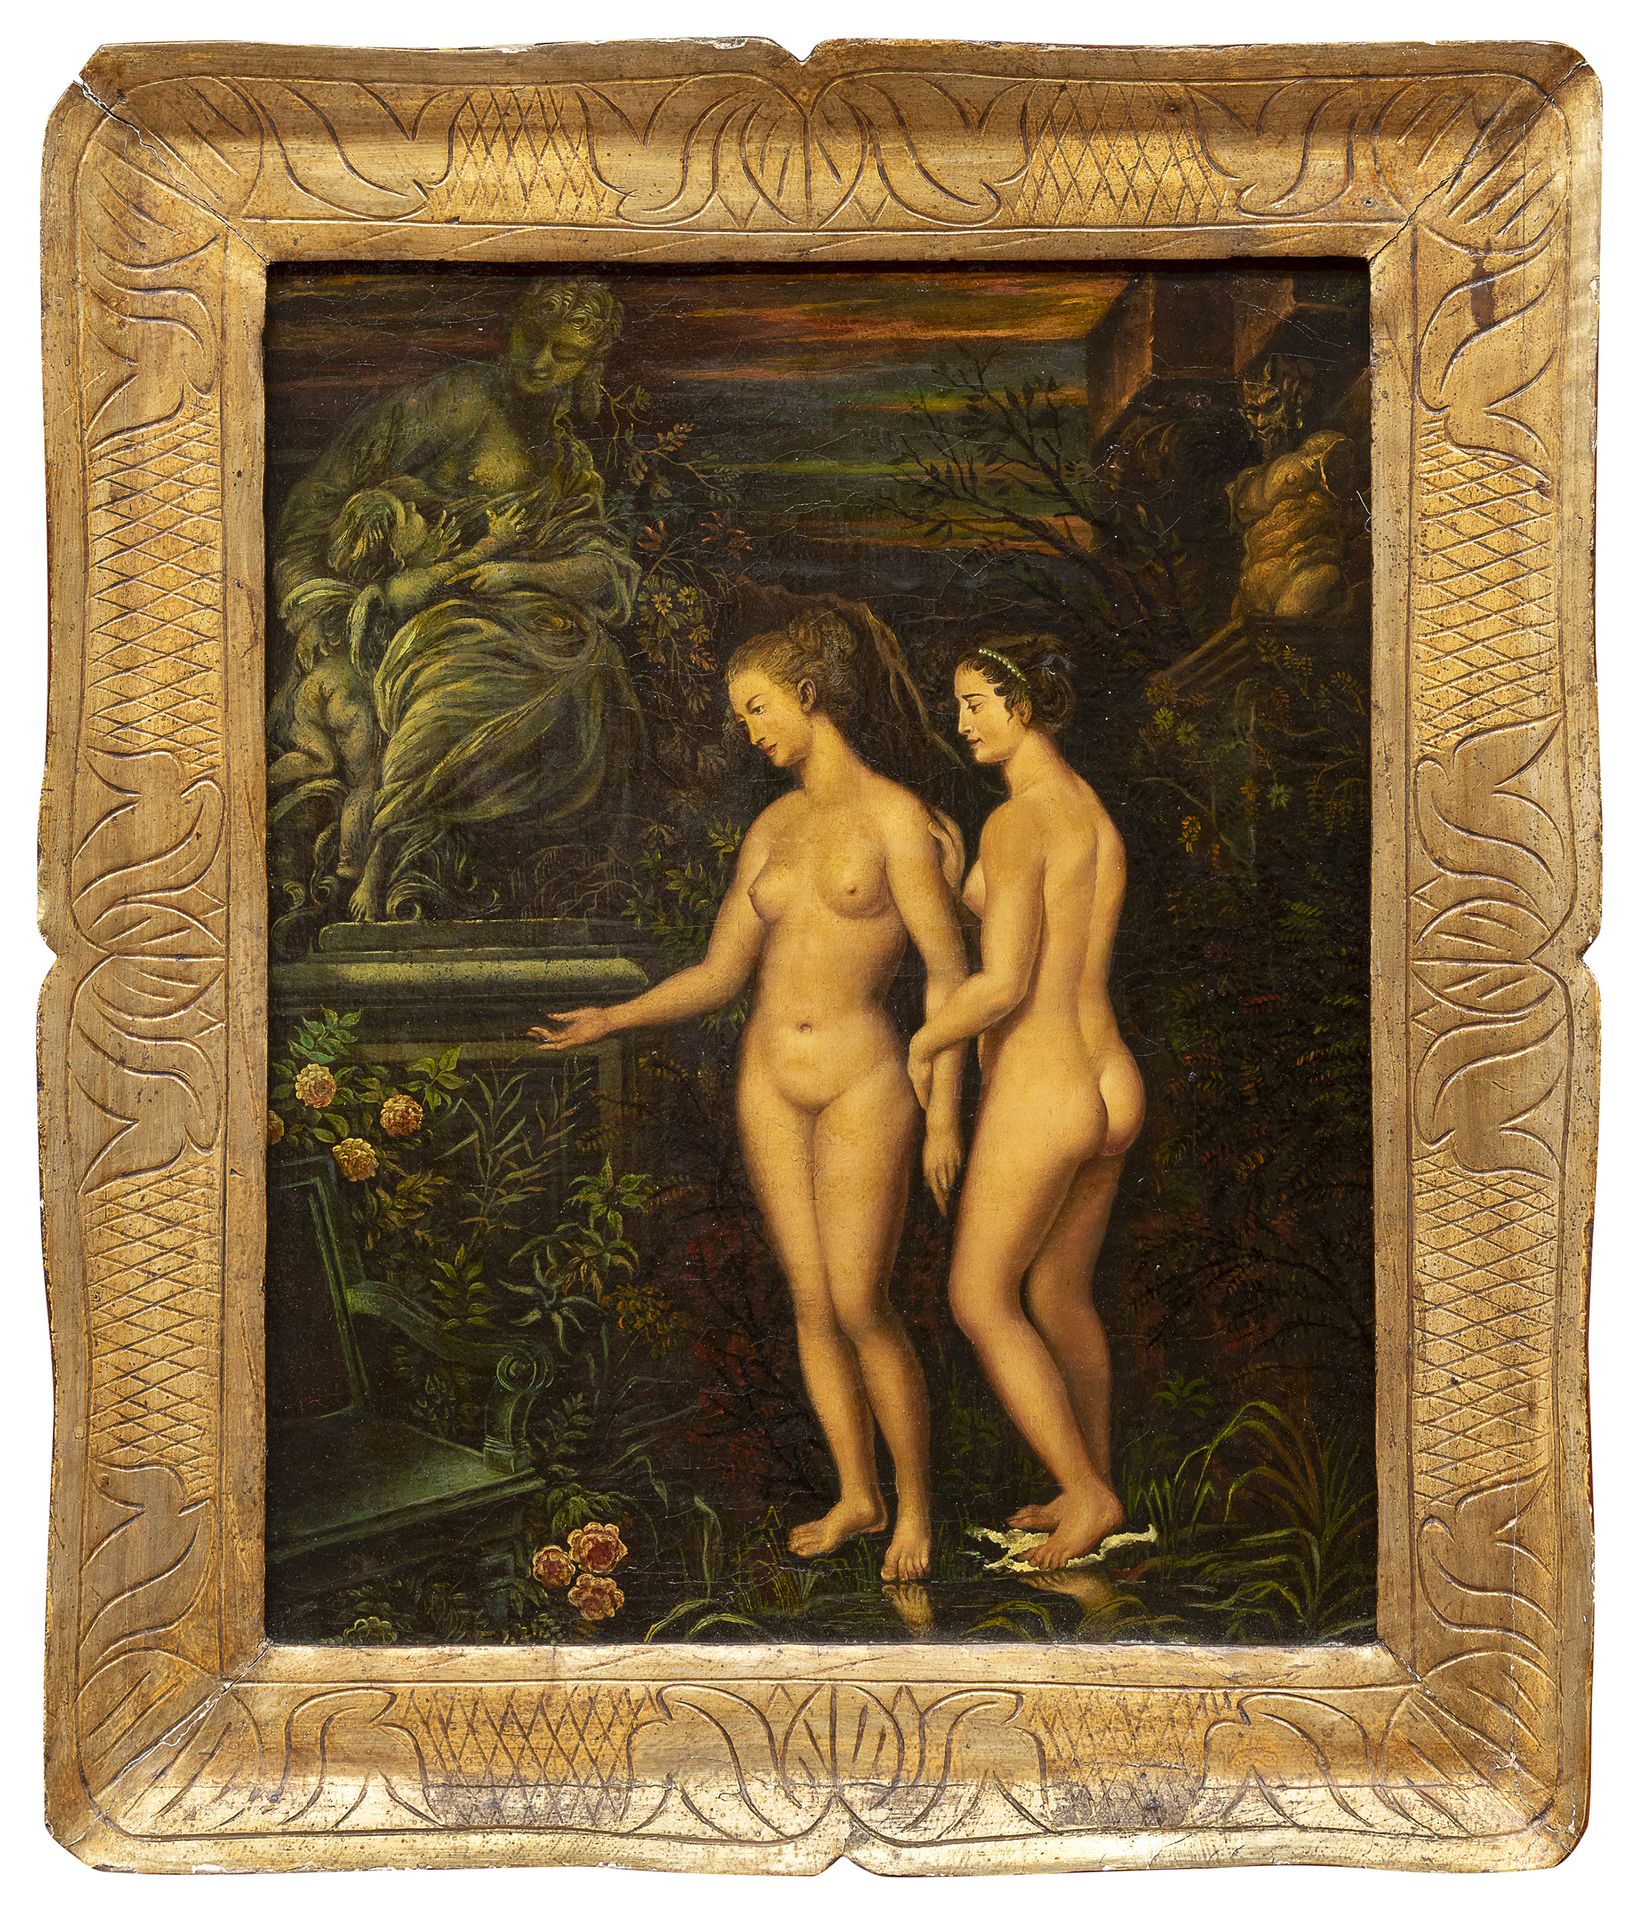 Null PINTOR ITALIANO, SIGLO XIX



EL BAÑO DE VENUS

Óleo sobre lienzo, cm. 40 x&hellip;